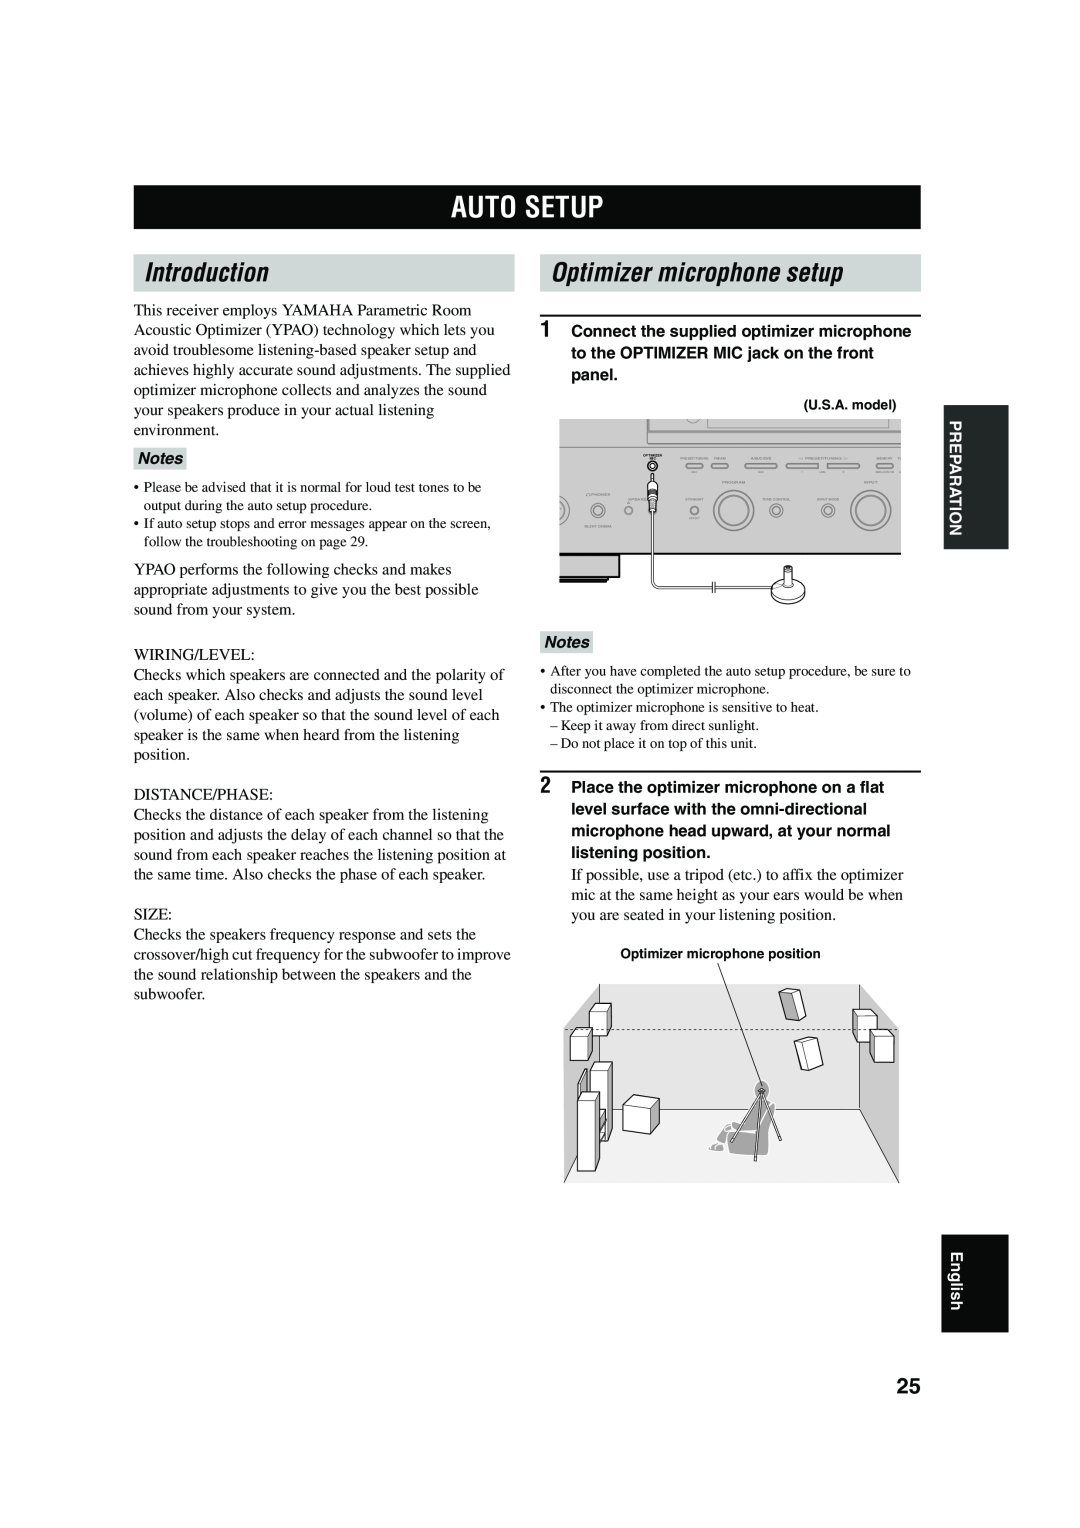 Yamaha RX-V650 owner manual Auto Setup, Introduction, Optimizer microphone setup 